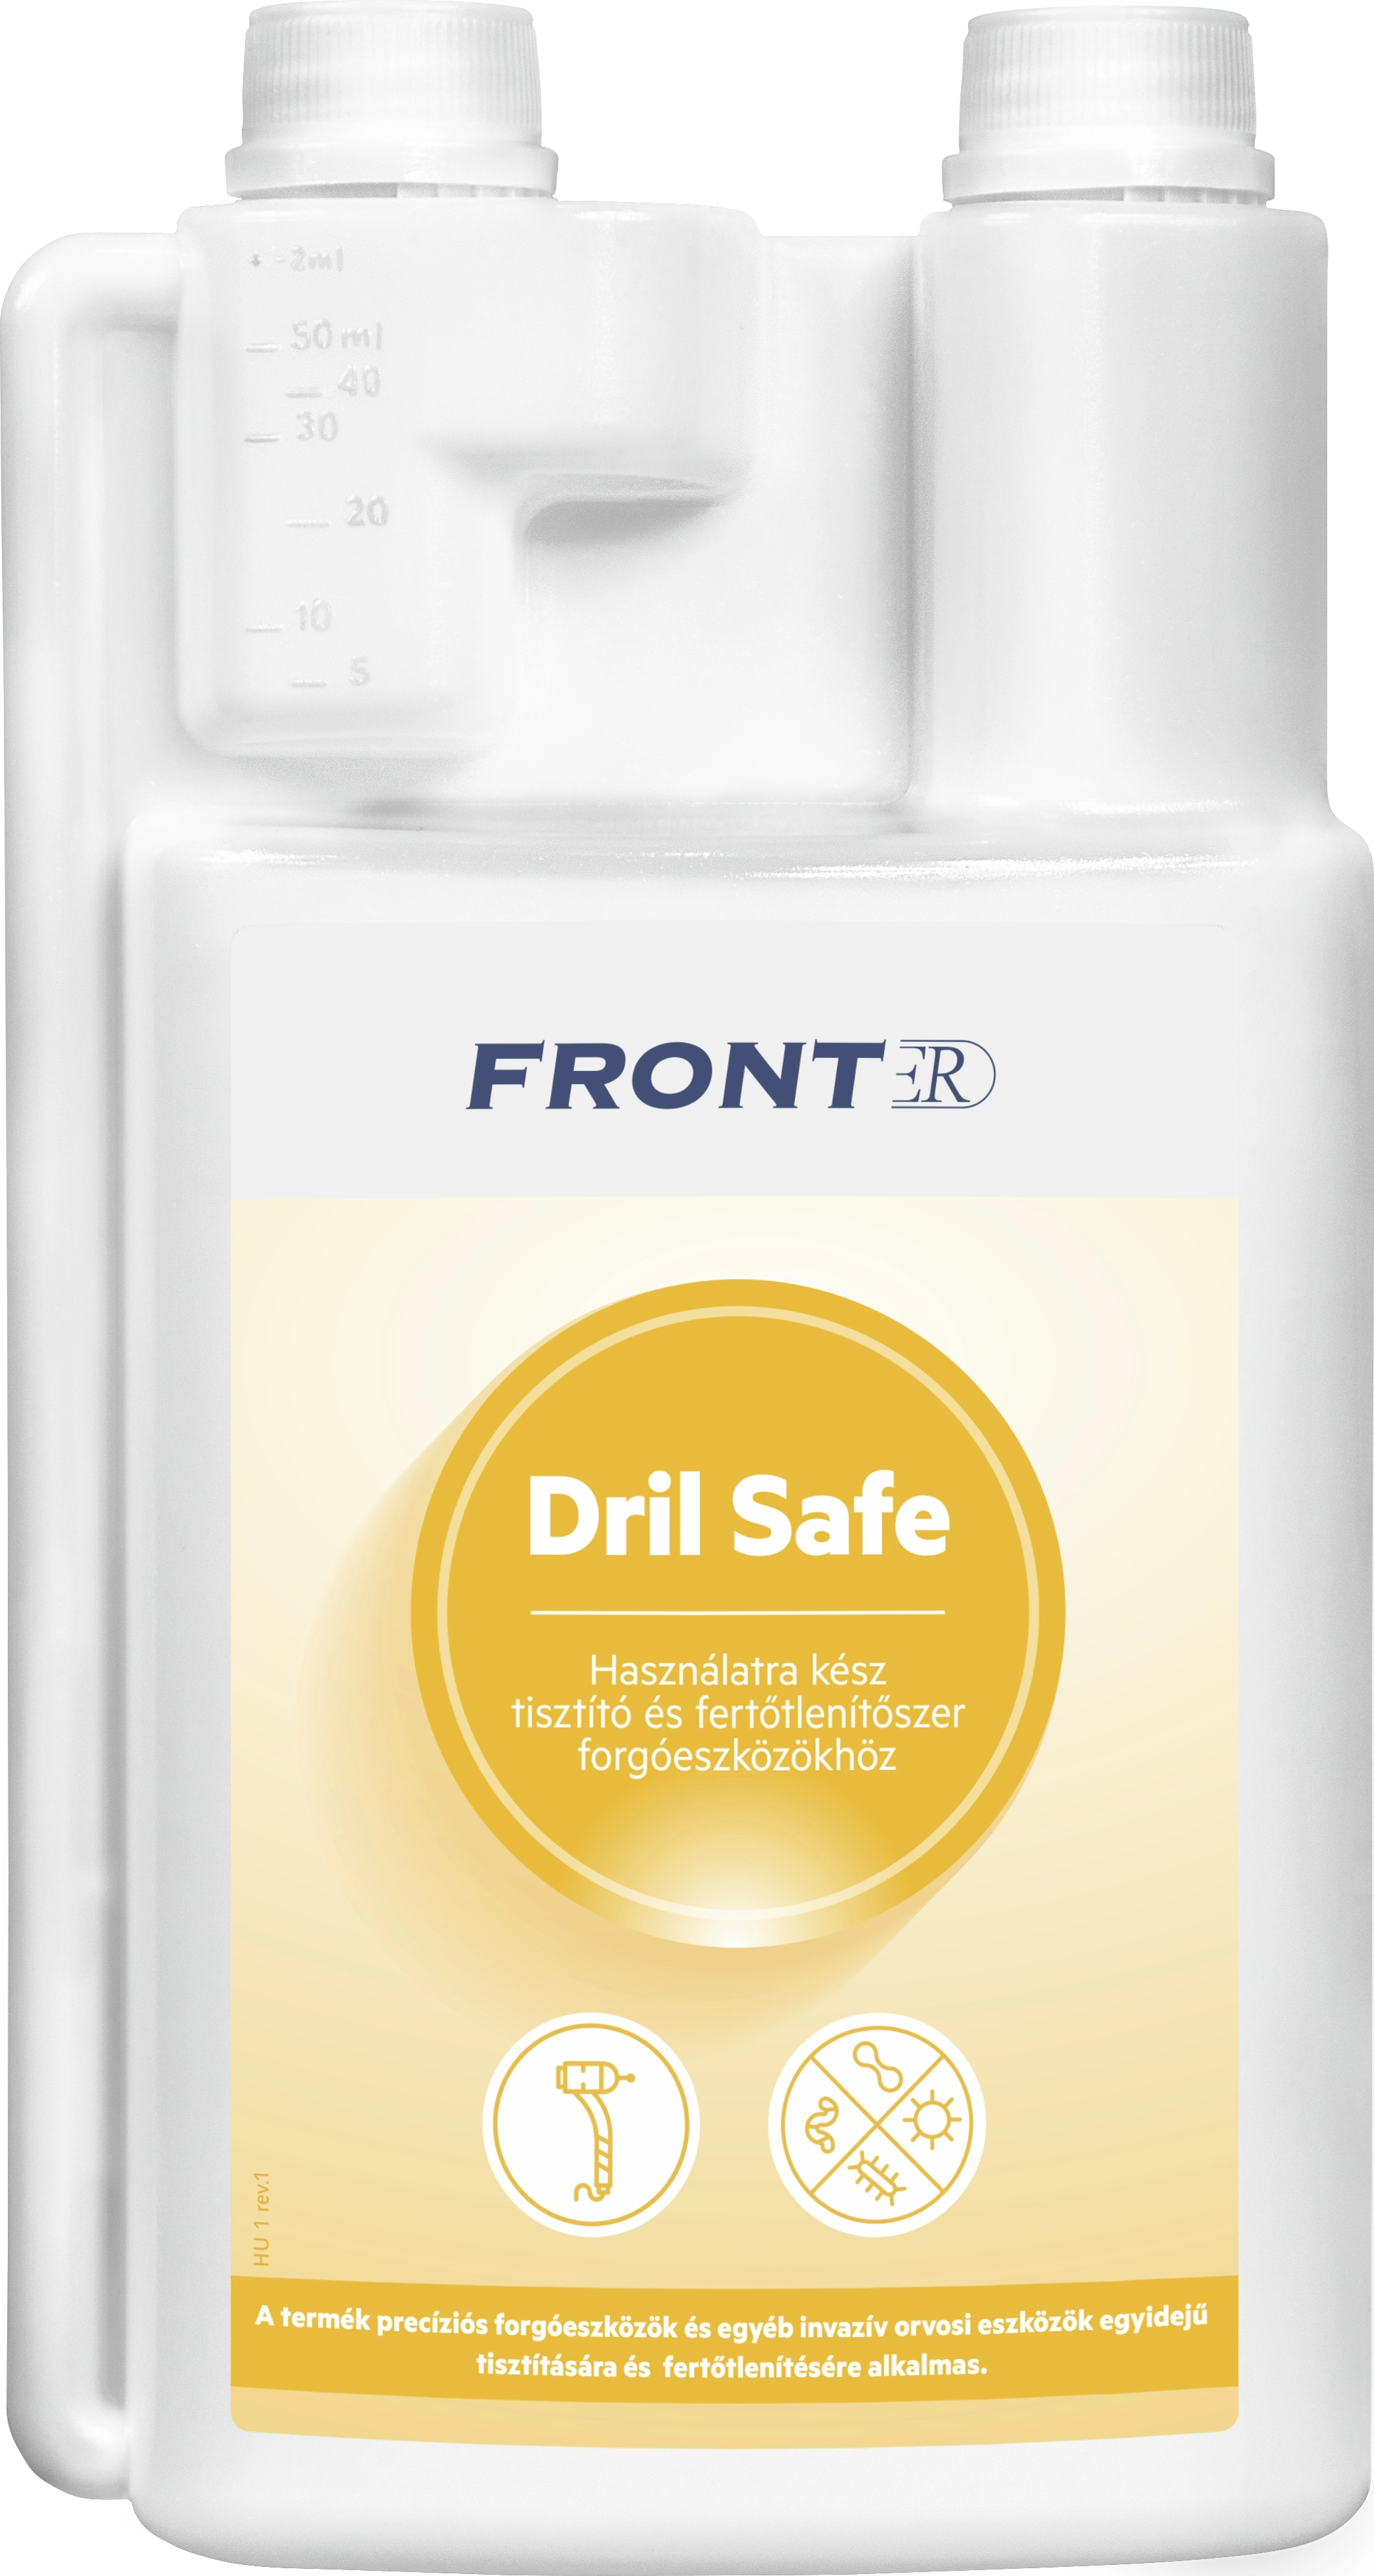 FrontER DrilSafe fogászati fúrófertőtlenítő 1 liter